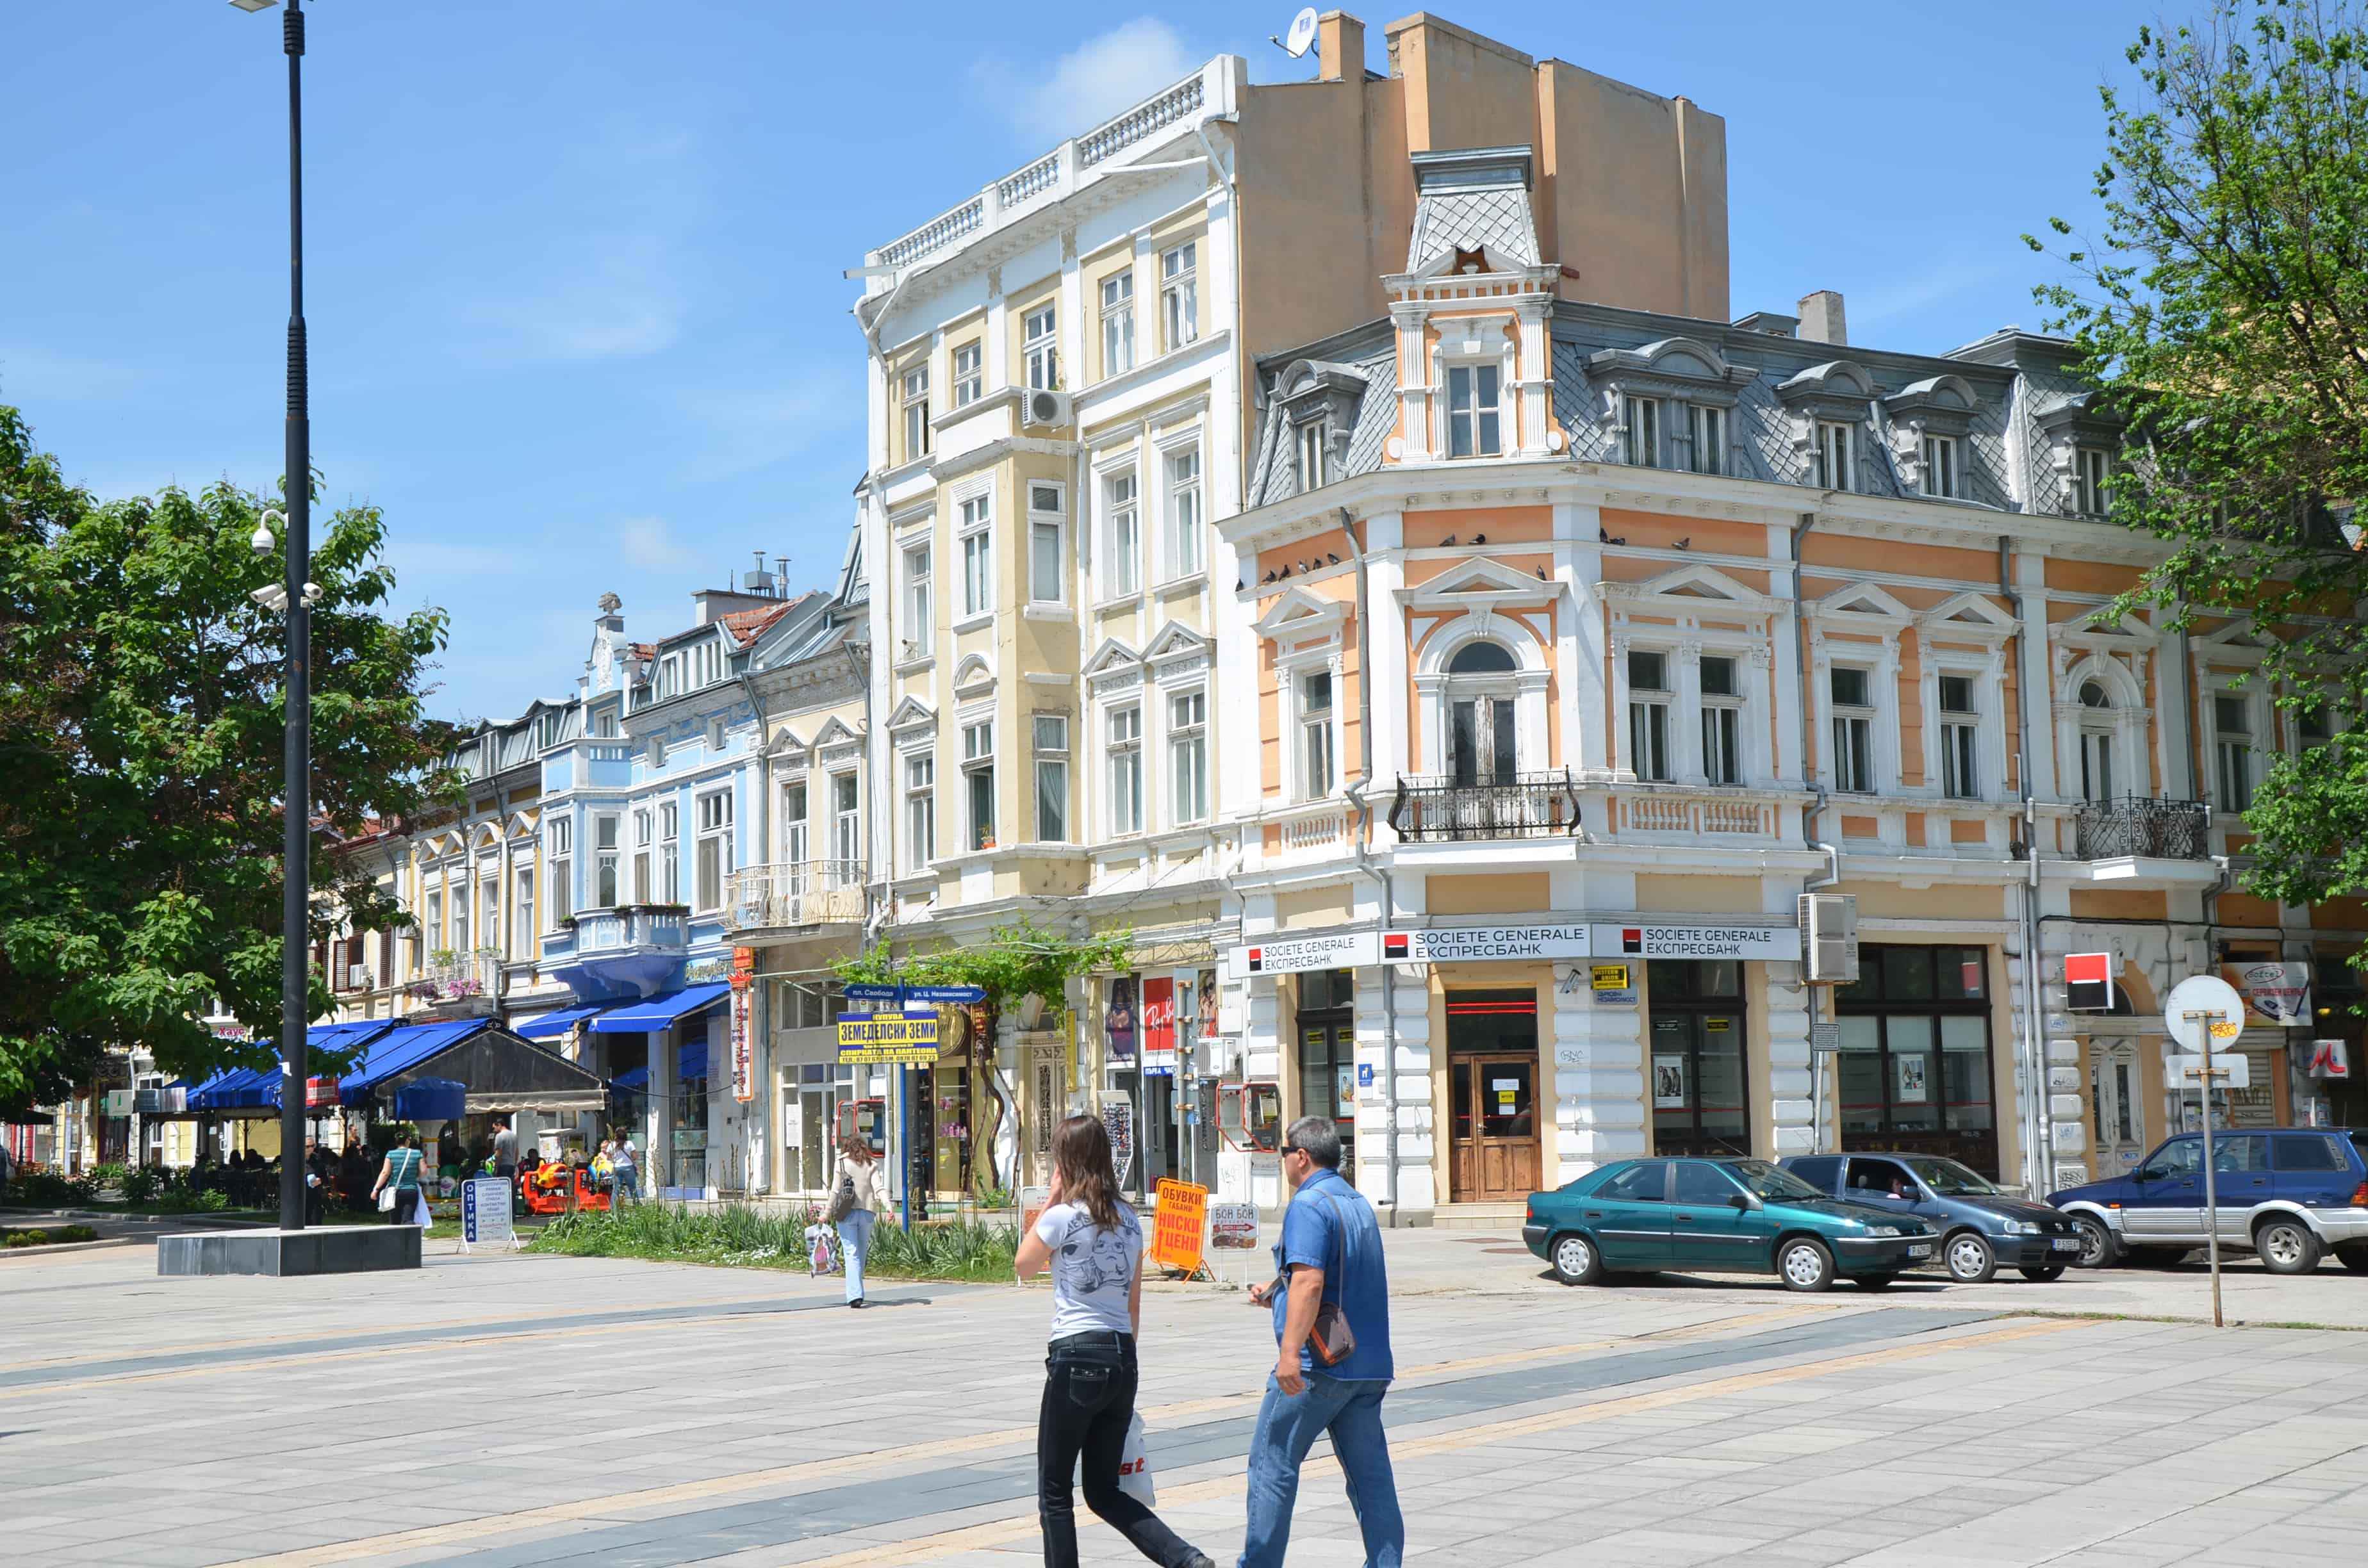 Buildings on Ploshtad Svoboda in Ruse, Bulgaria